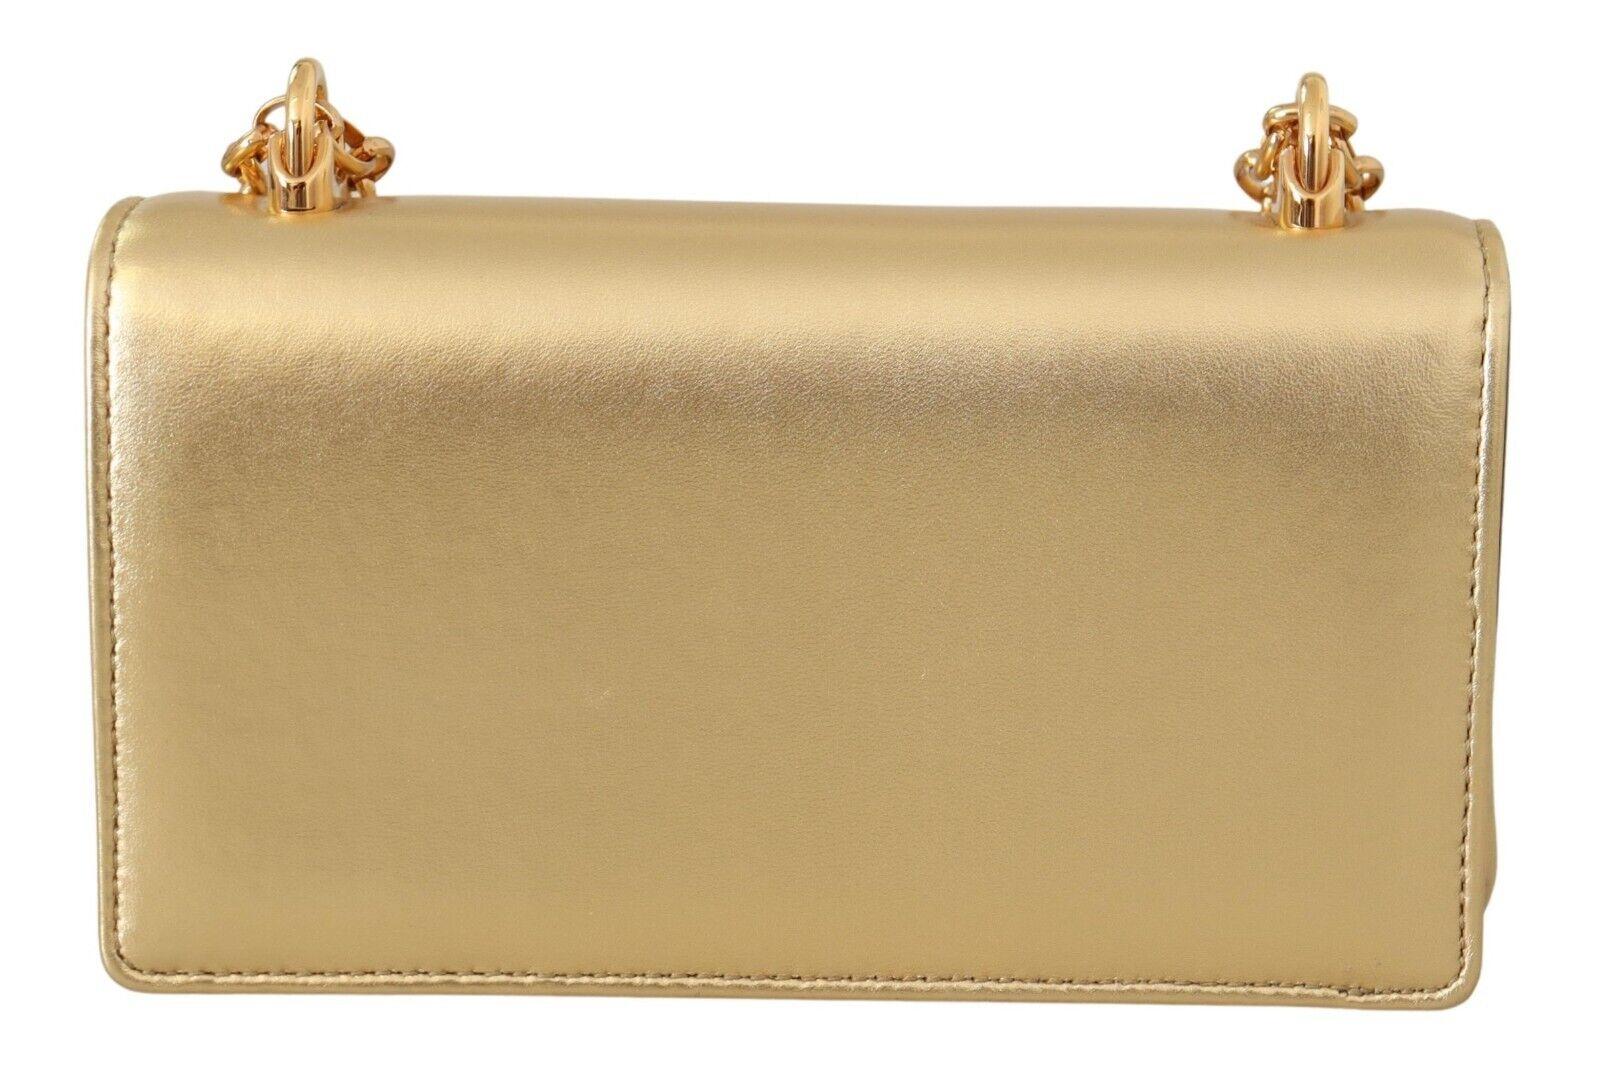 gold phone purse